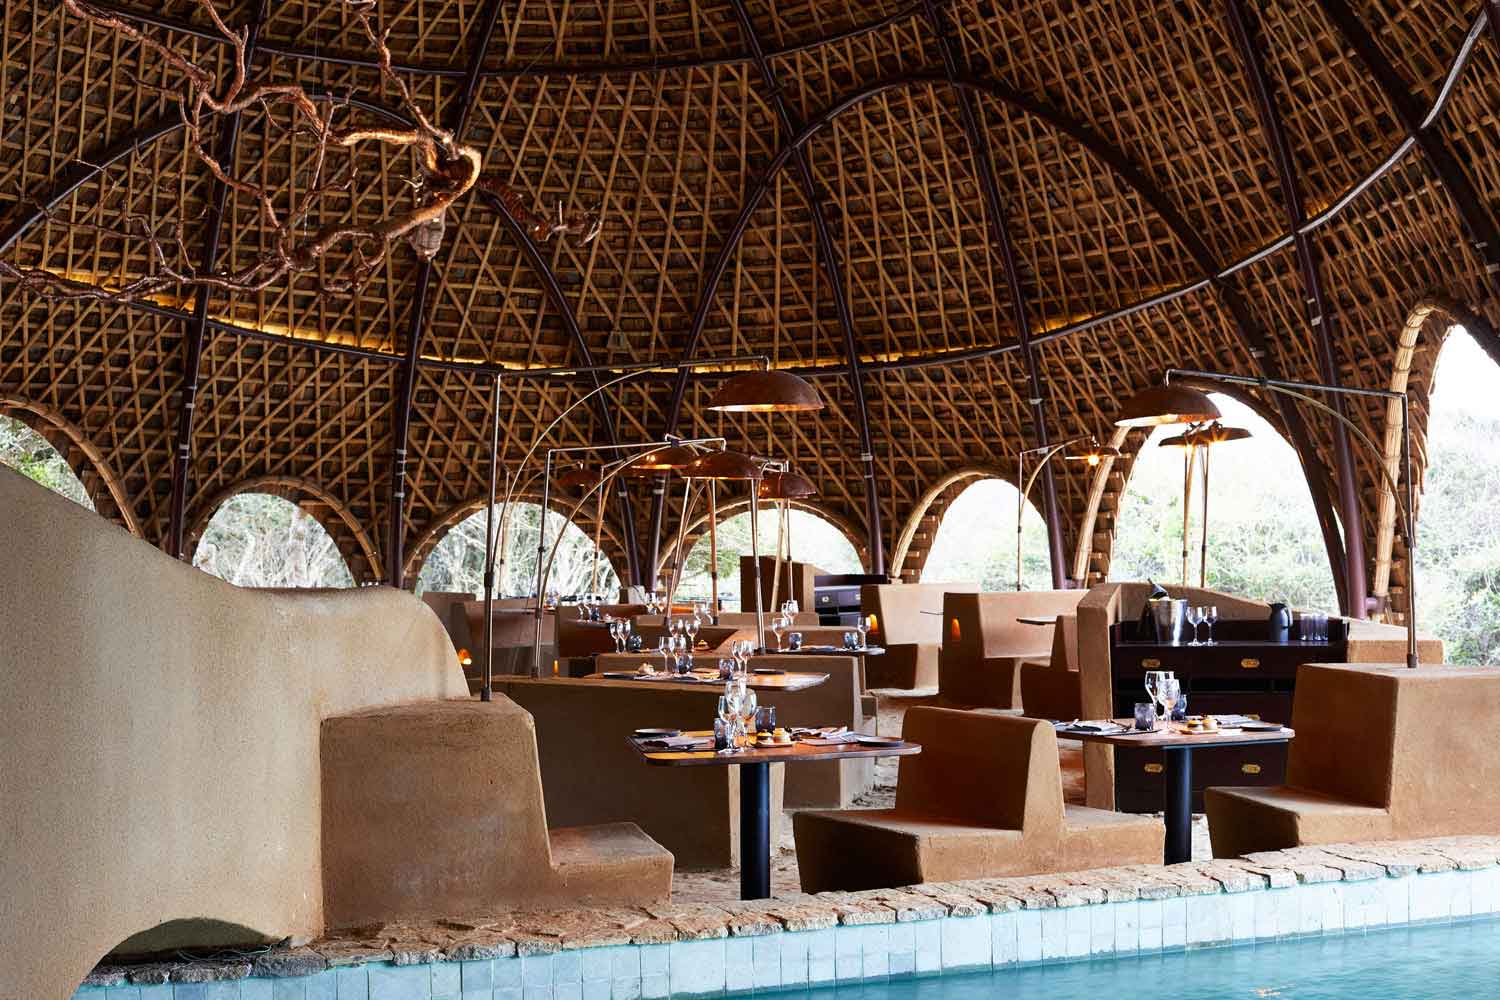 The interior of the Ten Tuskers Bar in Wild Coast Tented Lodge Sri Lanka